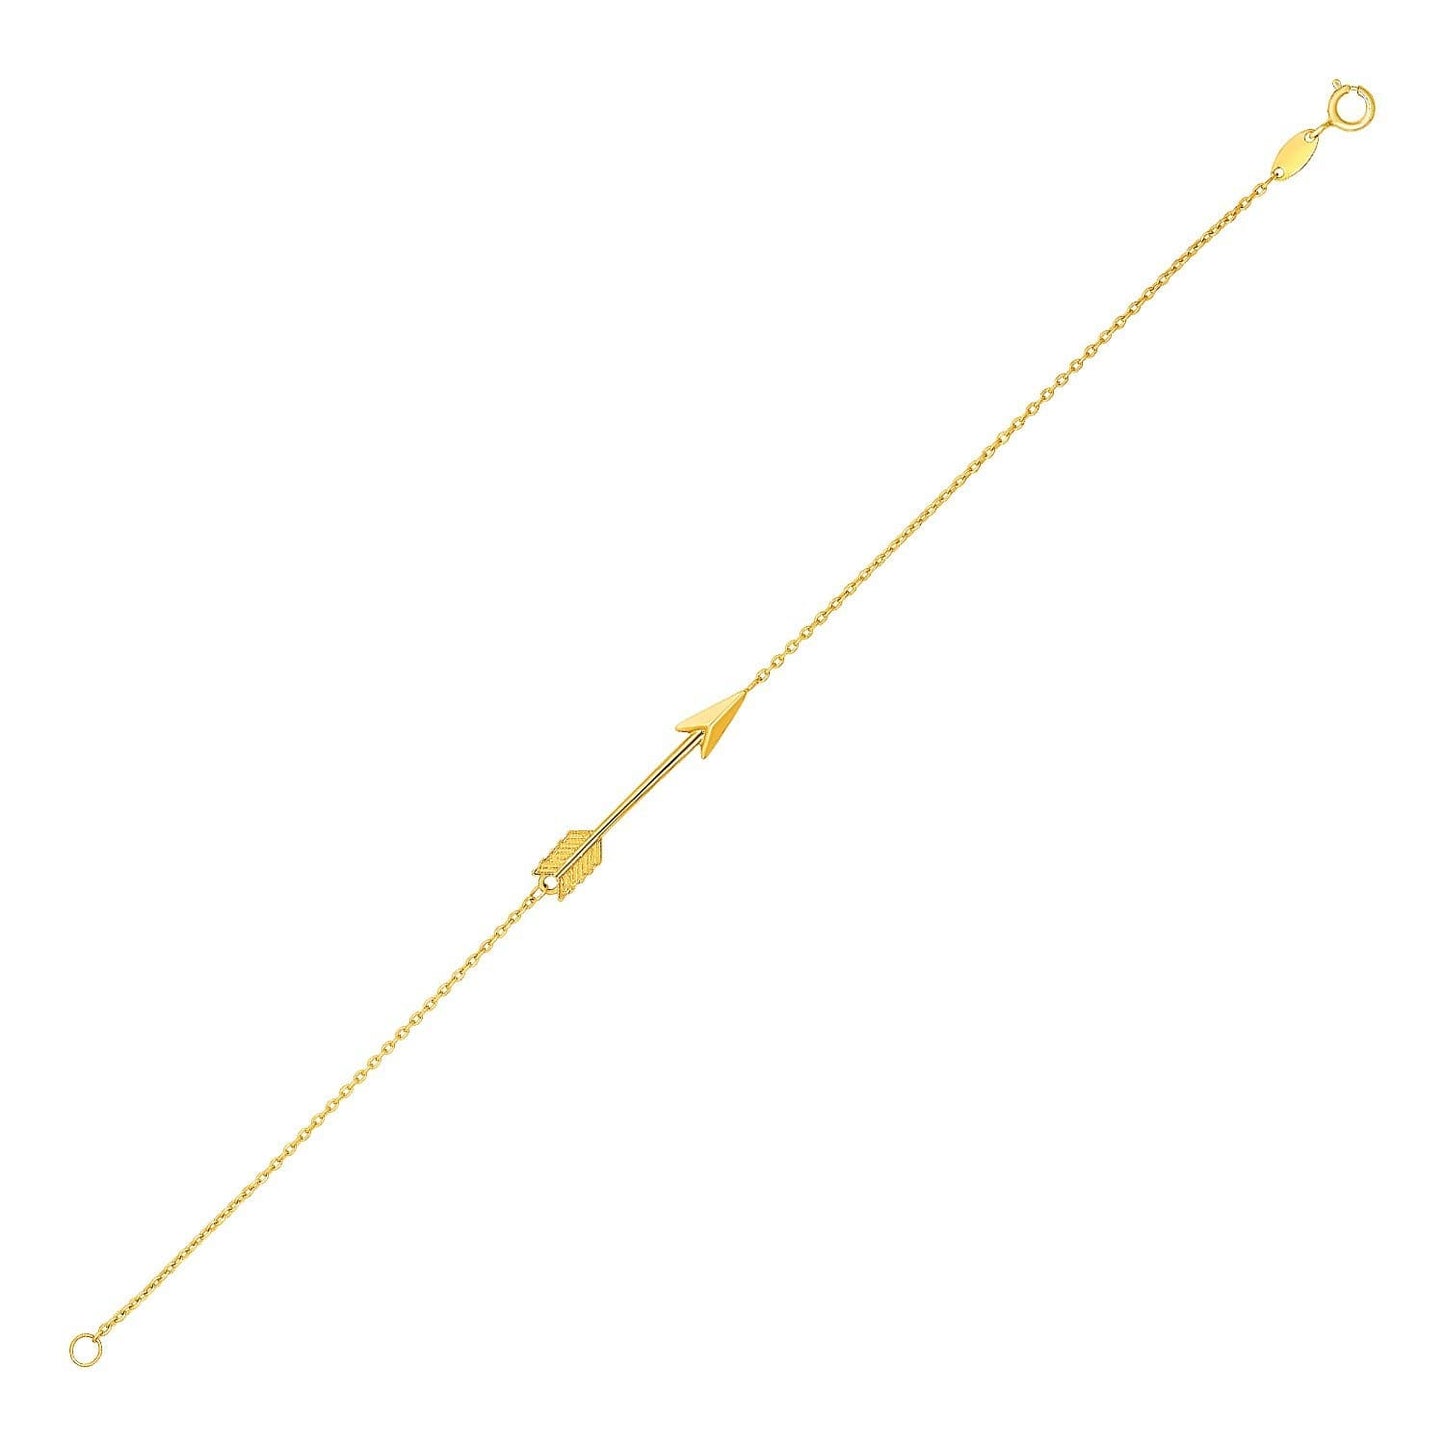 Bracelet with Arrow in 10k Yellow Gold